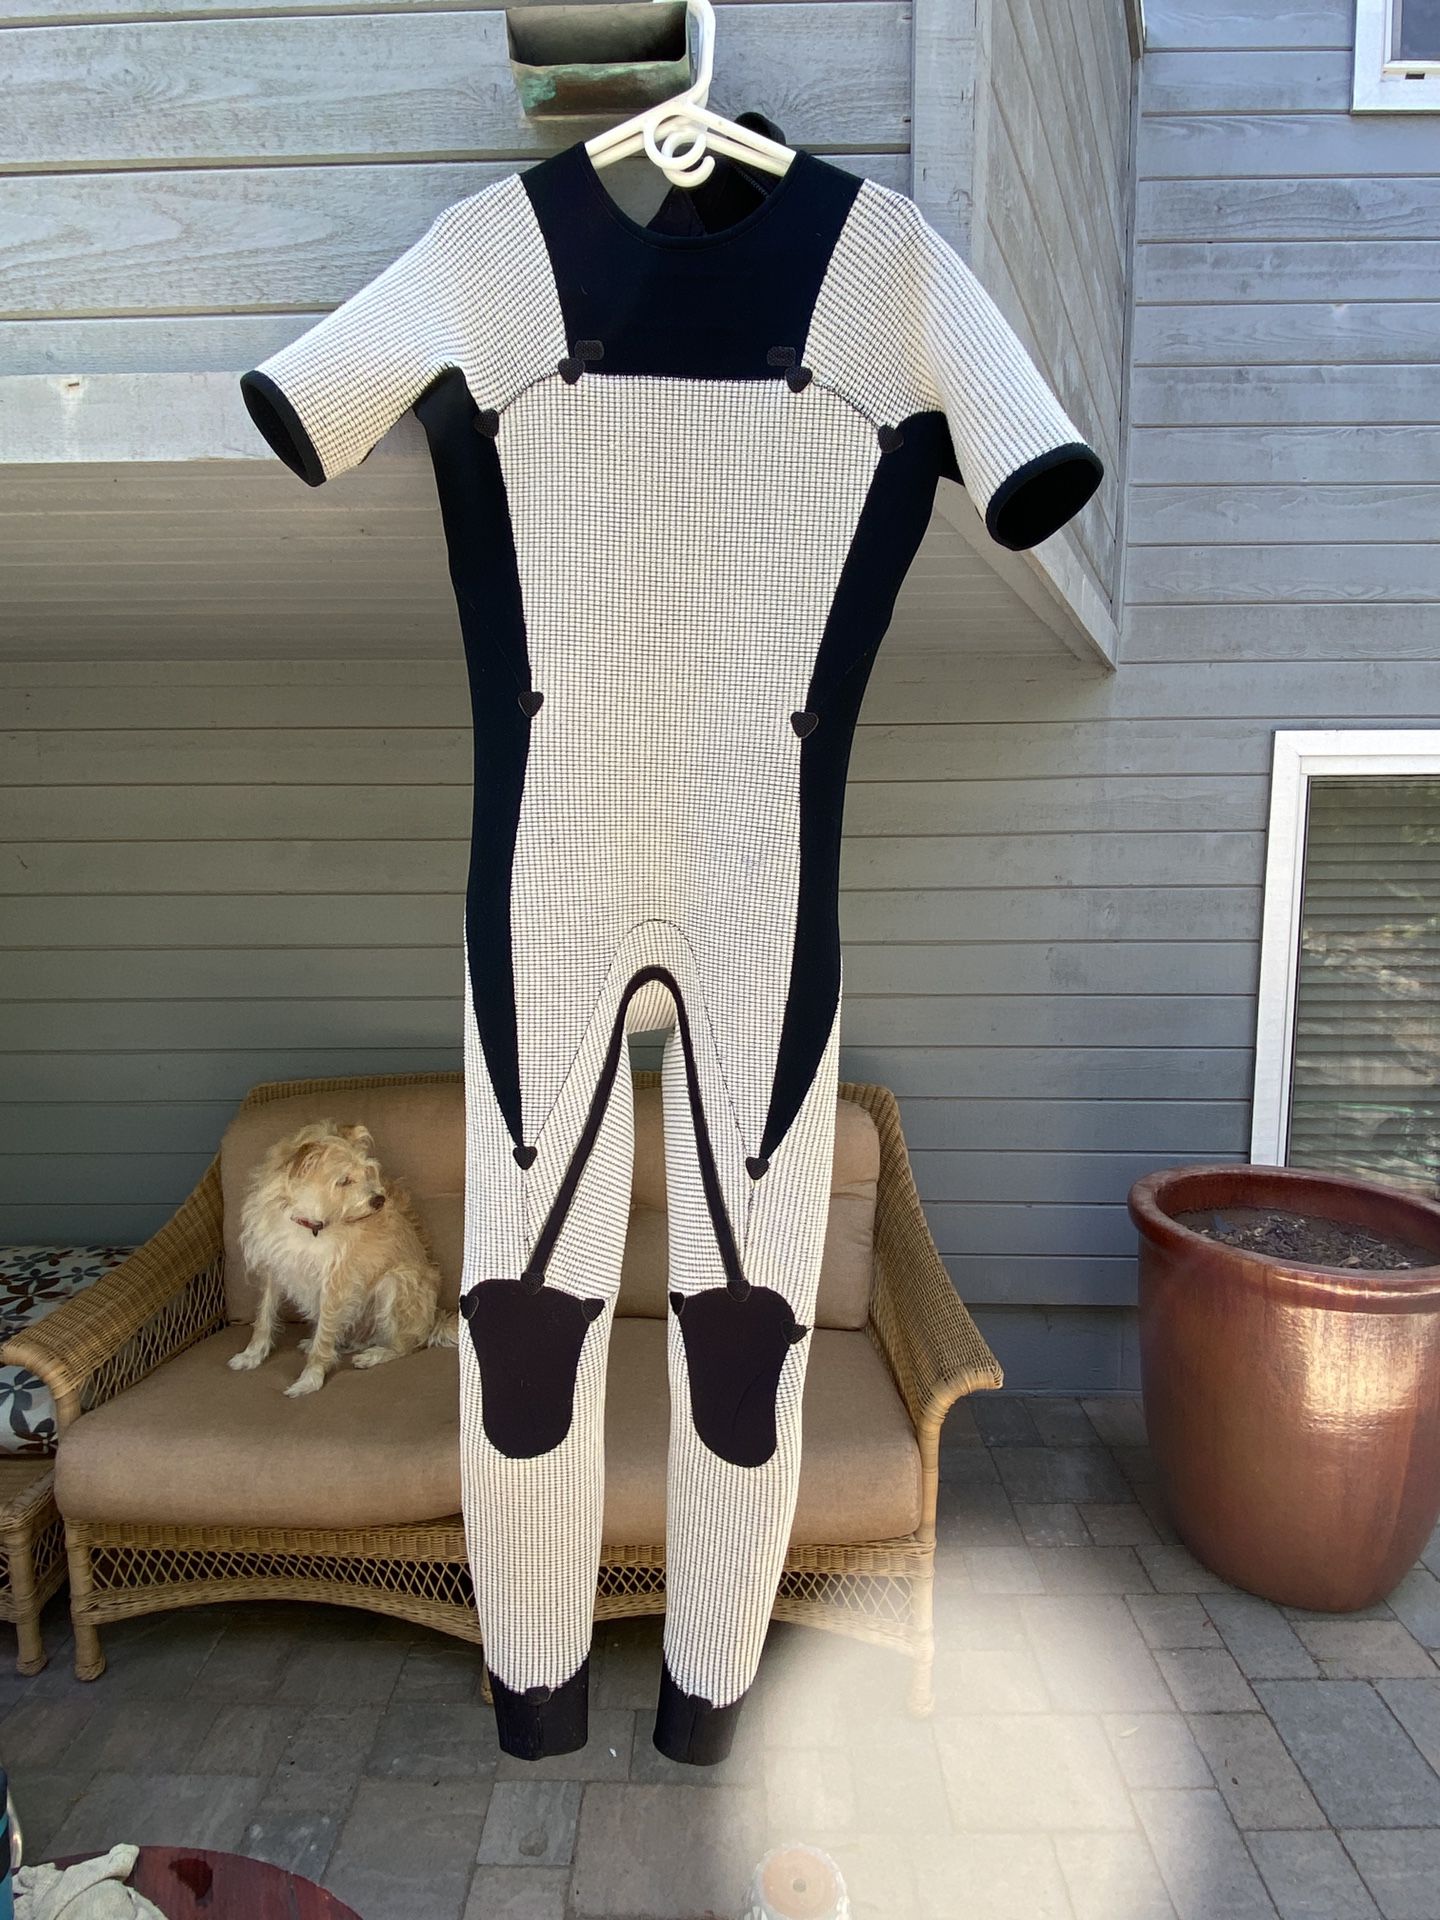 Patagonia Wetsuit, Mens Large, Short Sleeve Full Suit, R2